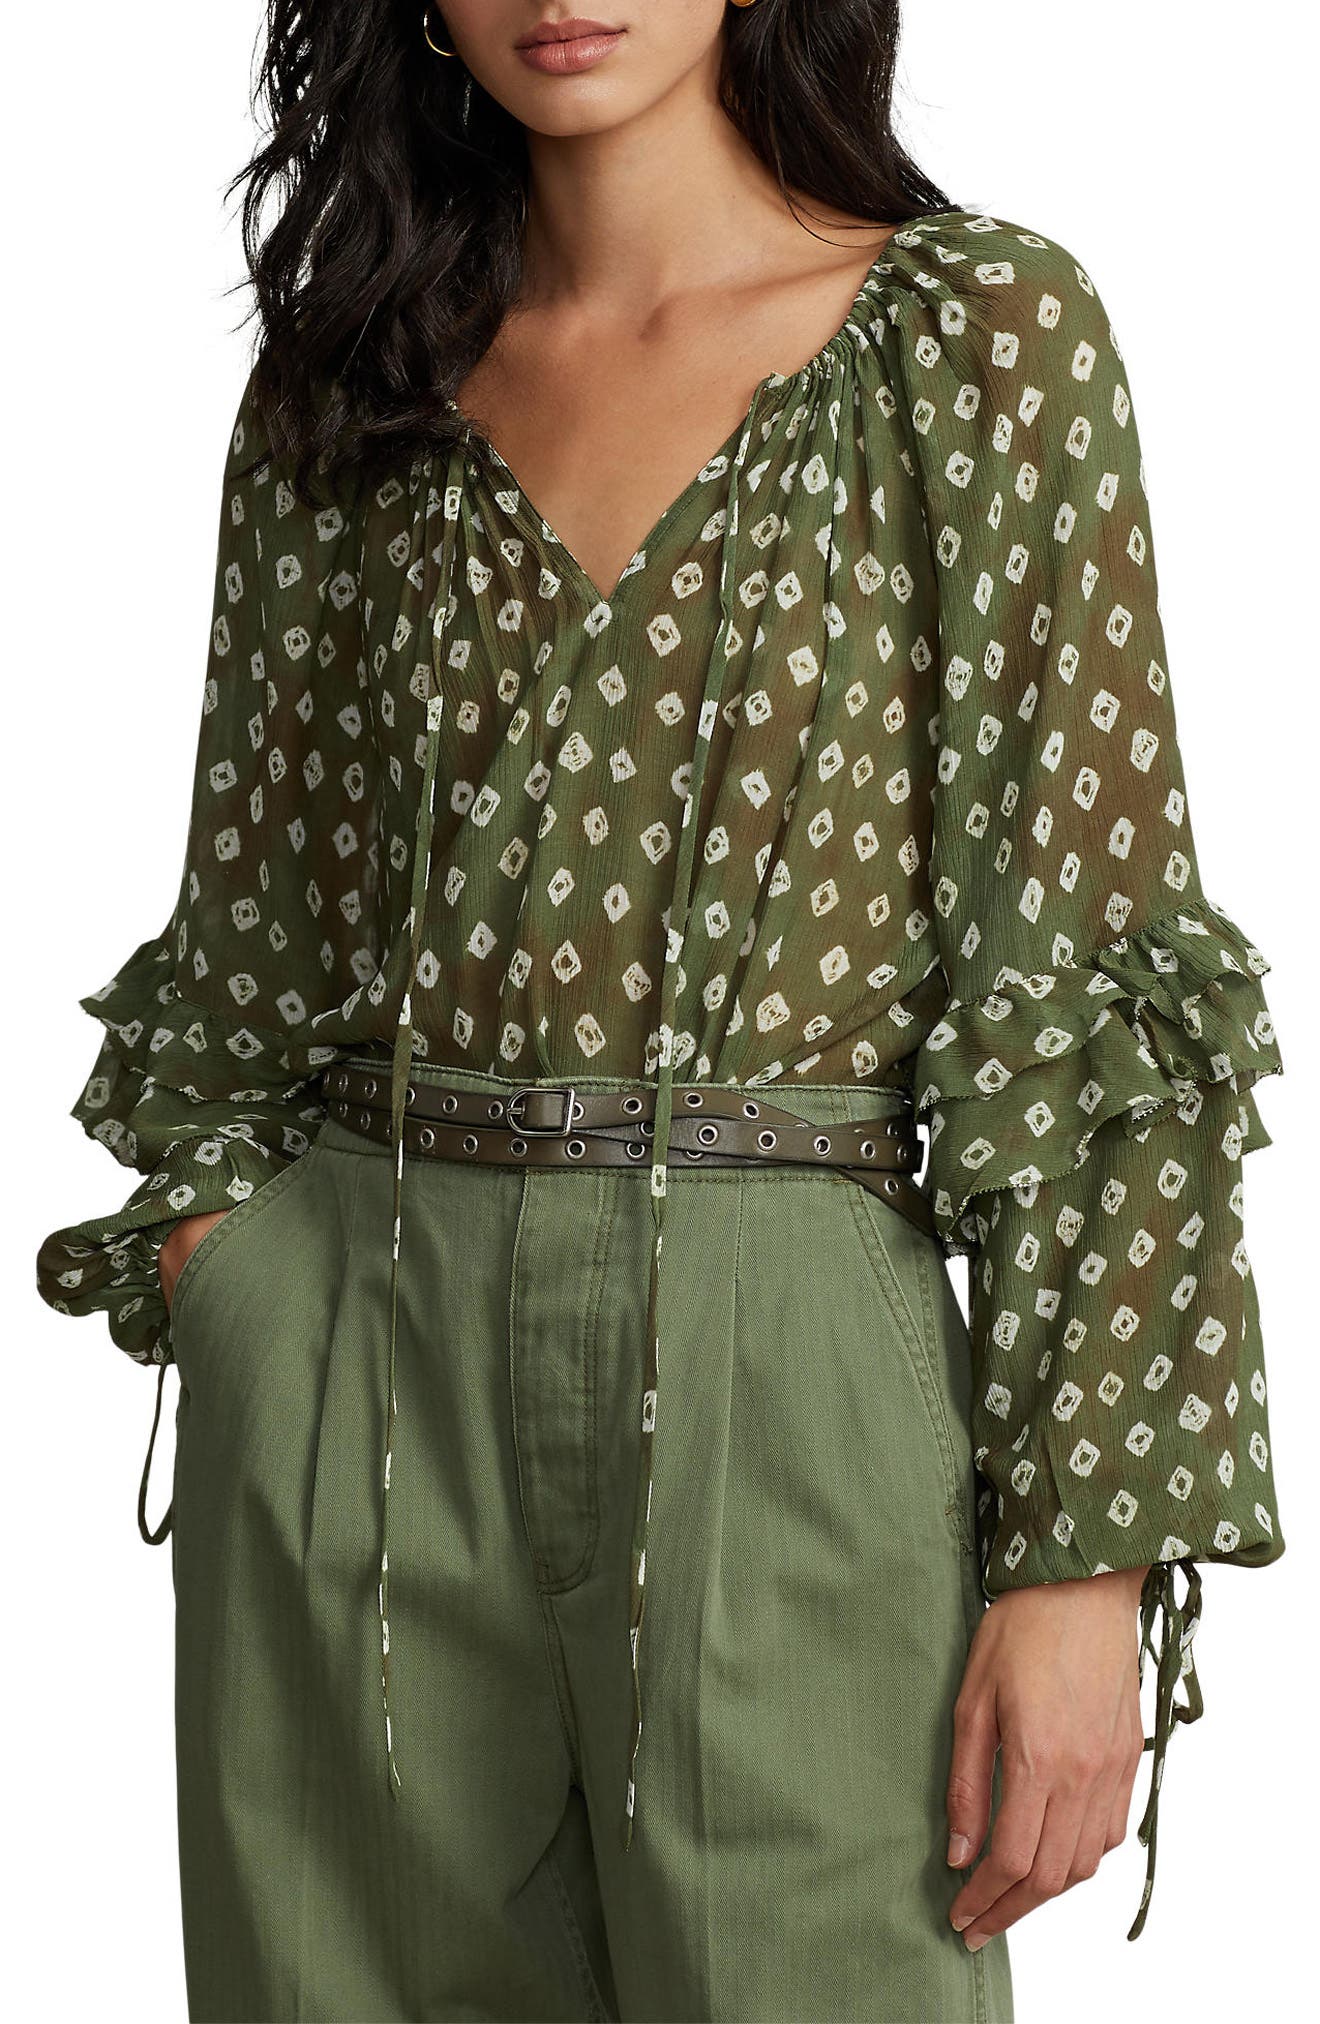 olive blouse top | Nordstrom